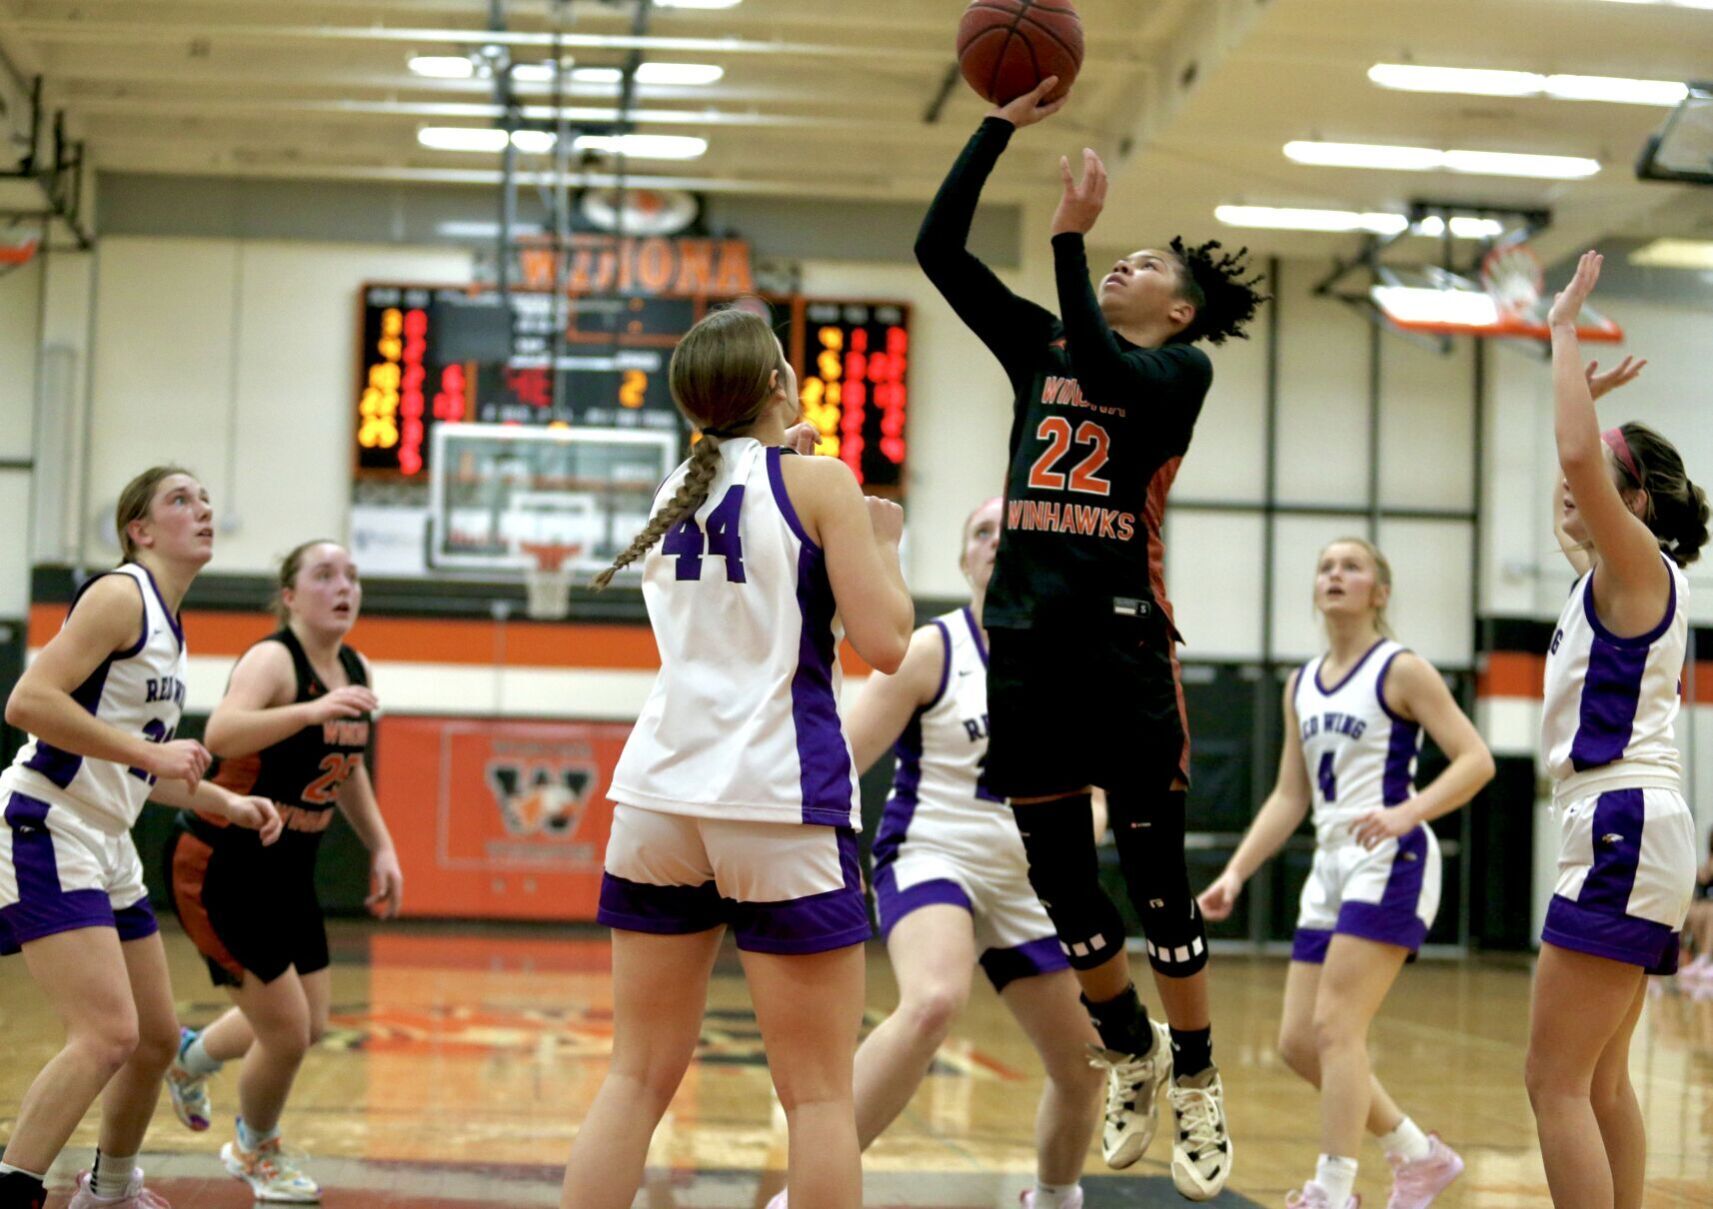 Winona High School Girls Basketball Team Secures Season Opener Victory